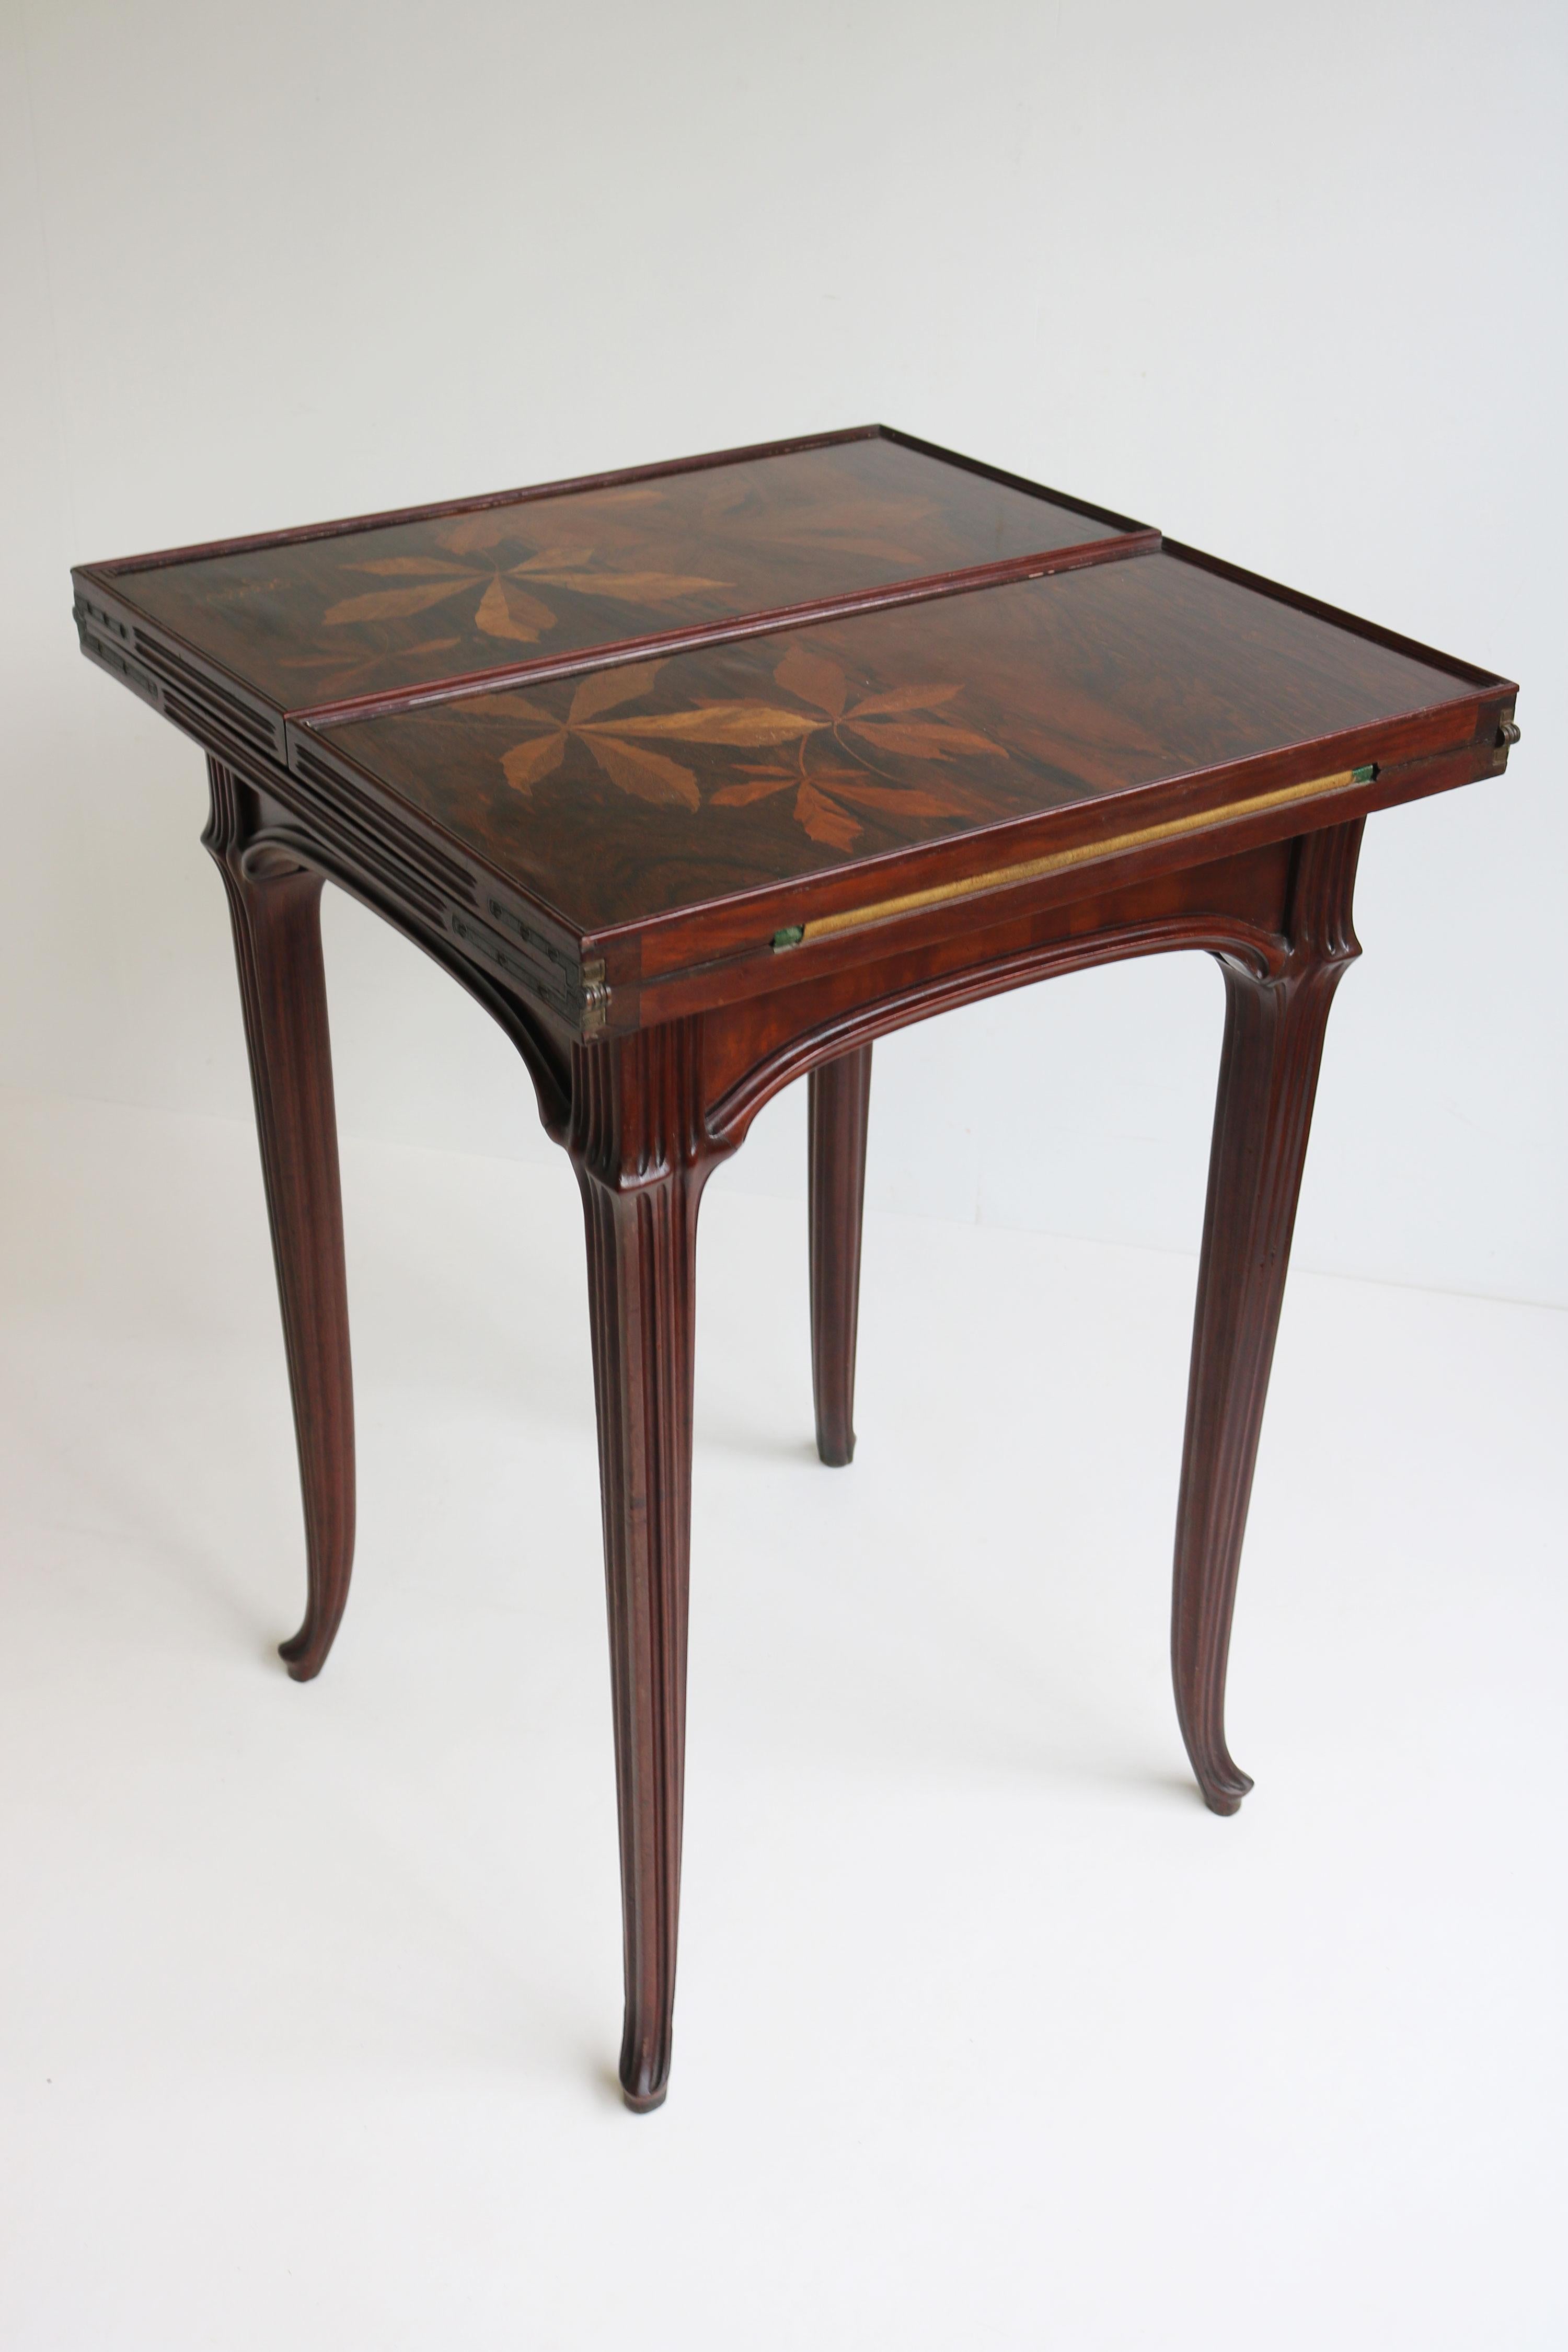 Original French Art Nouveau game table / side table by Emile Gallé 1905 chestnut For Sale 2